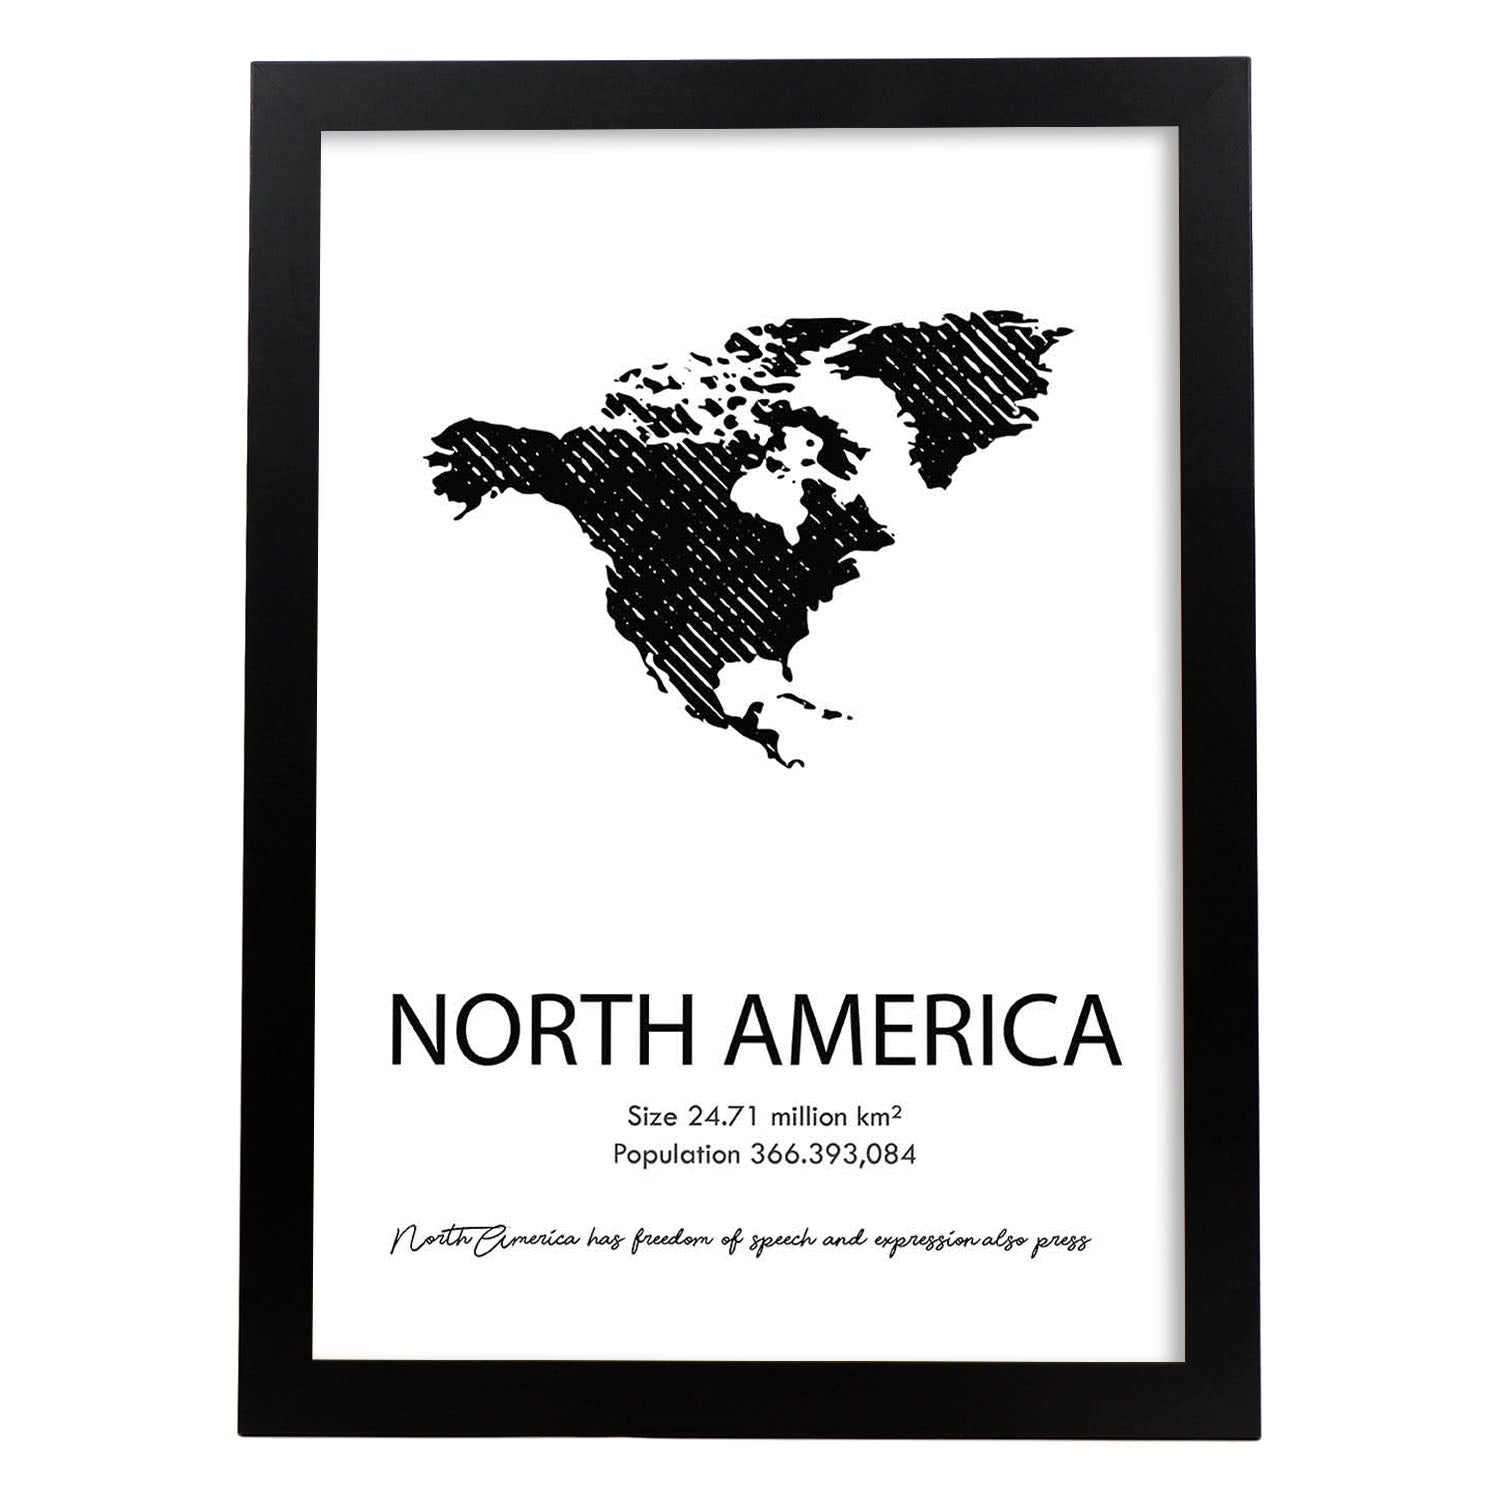 Poster de Norteamérica. Láminas de paises y continentes del mundo.-Artwork-Nacnic-A4-Marco Negro-Nacnic Estudio SL